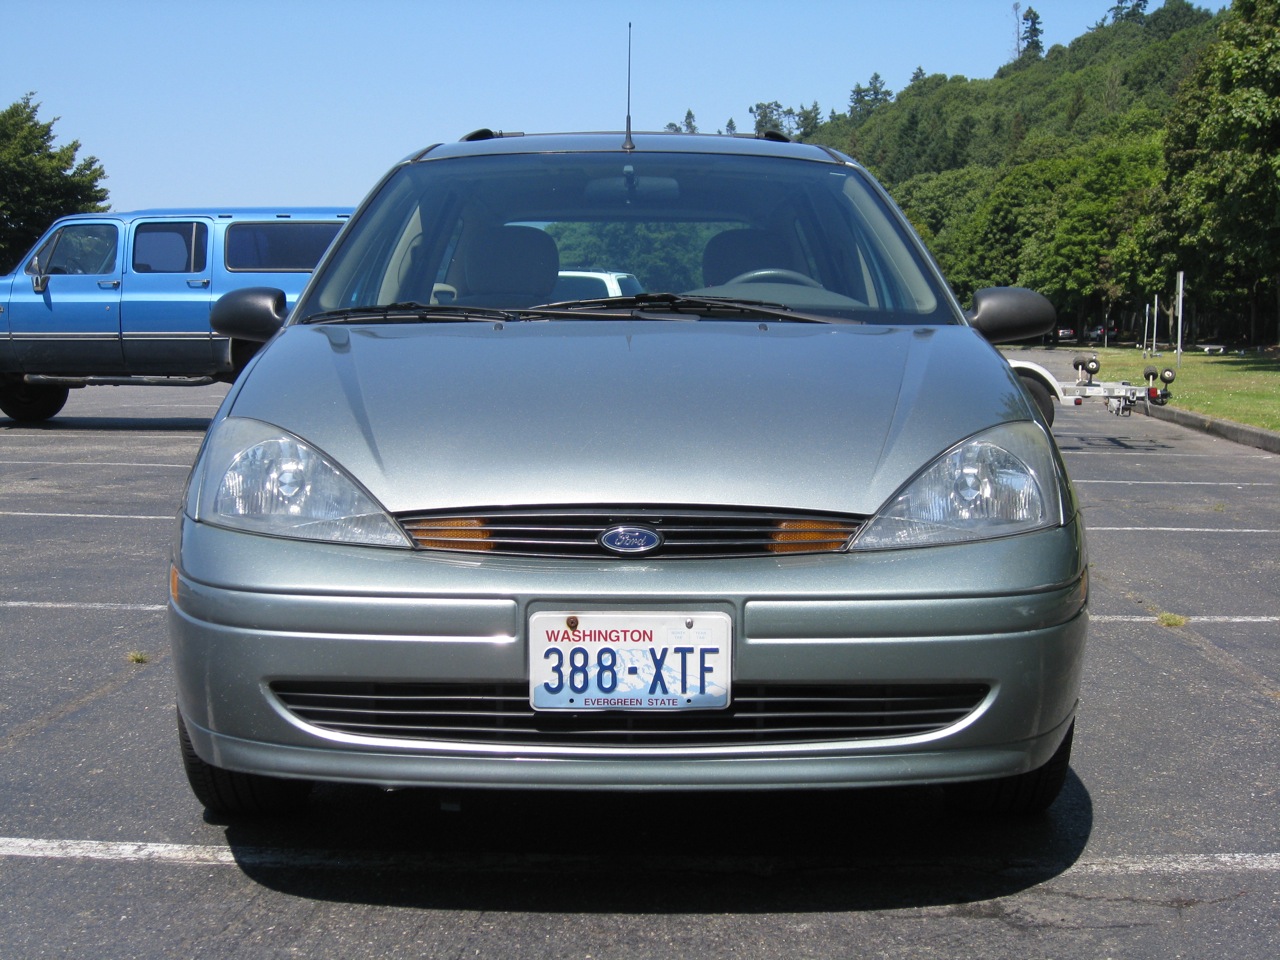 Value of 2003 ford focus canada #4